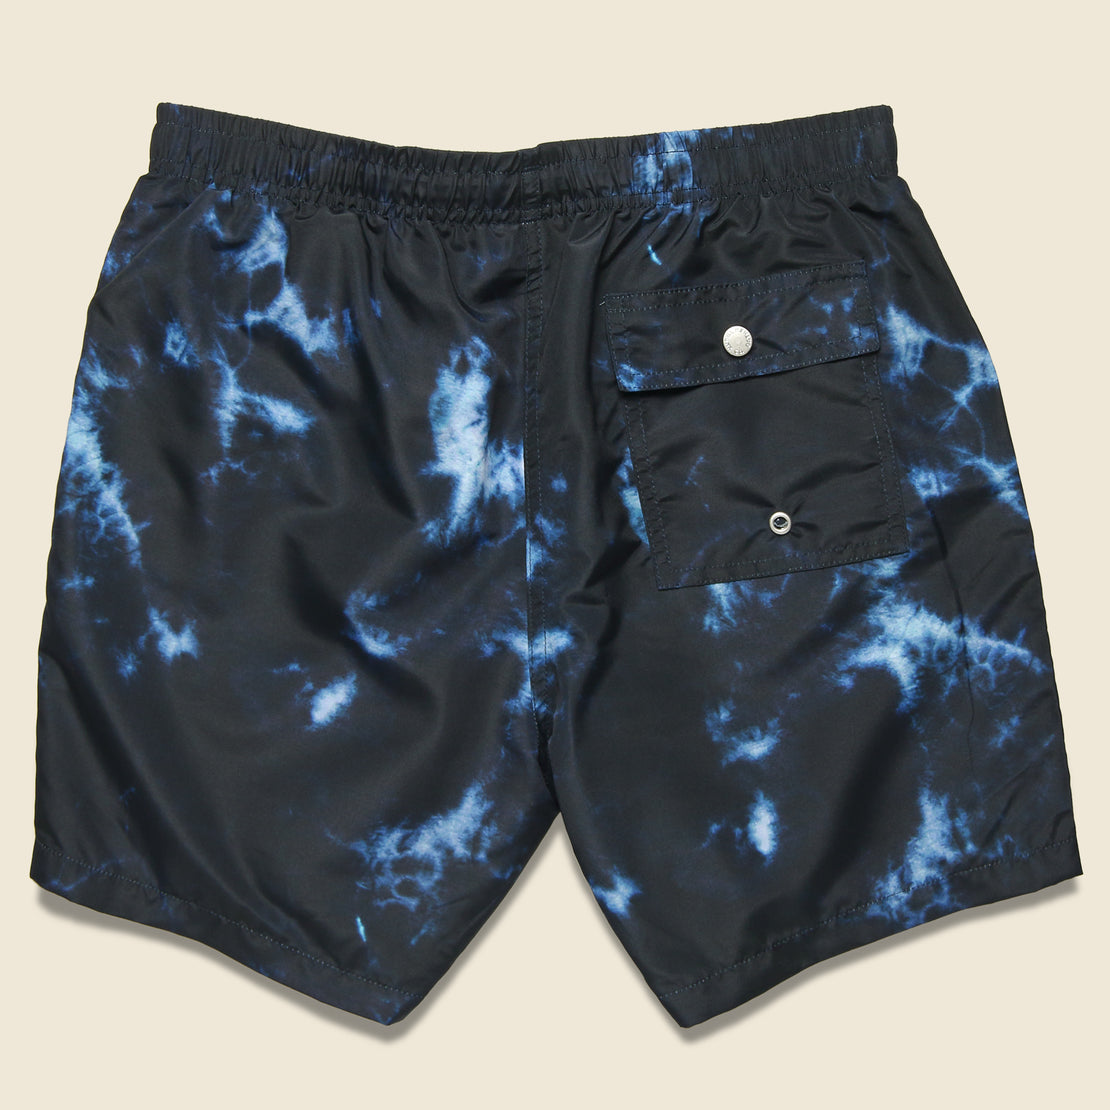 Shibori Dyed Swim Trunk - Indigo - Bather Trunk Co. - STAG Provisions - Shorts - Swim